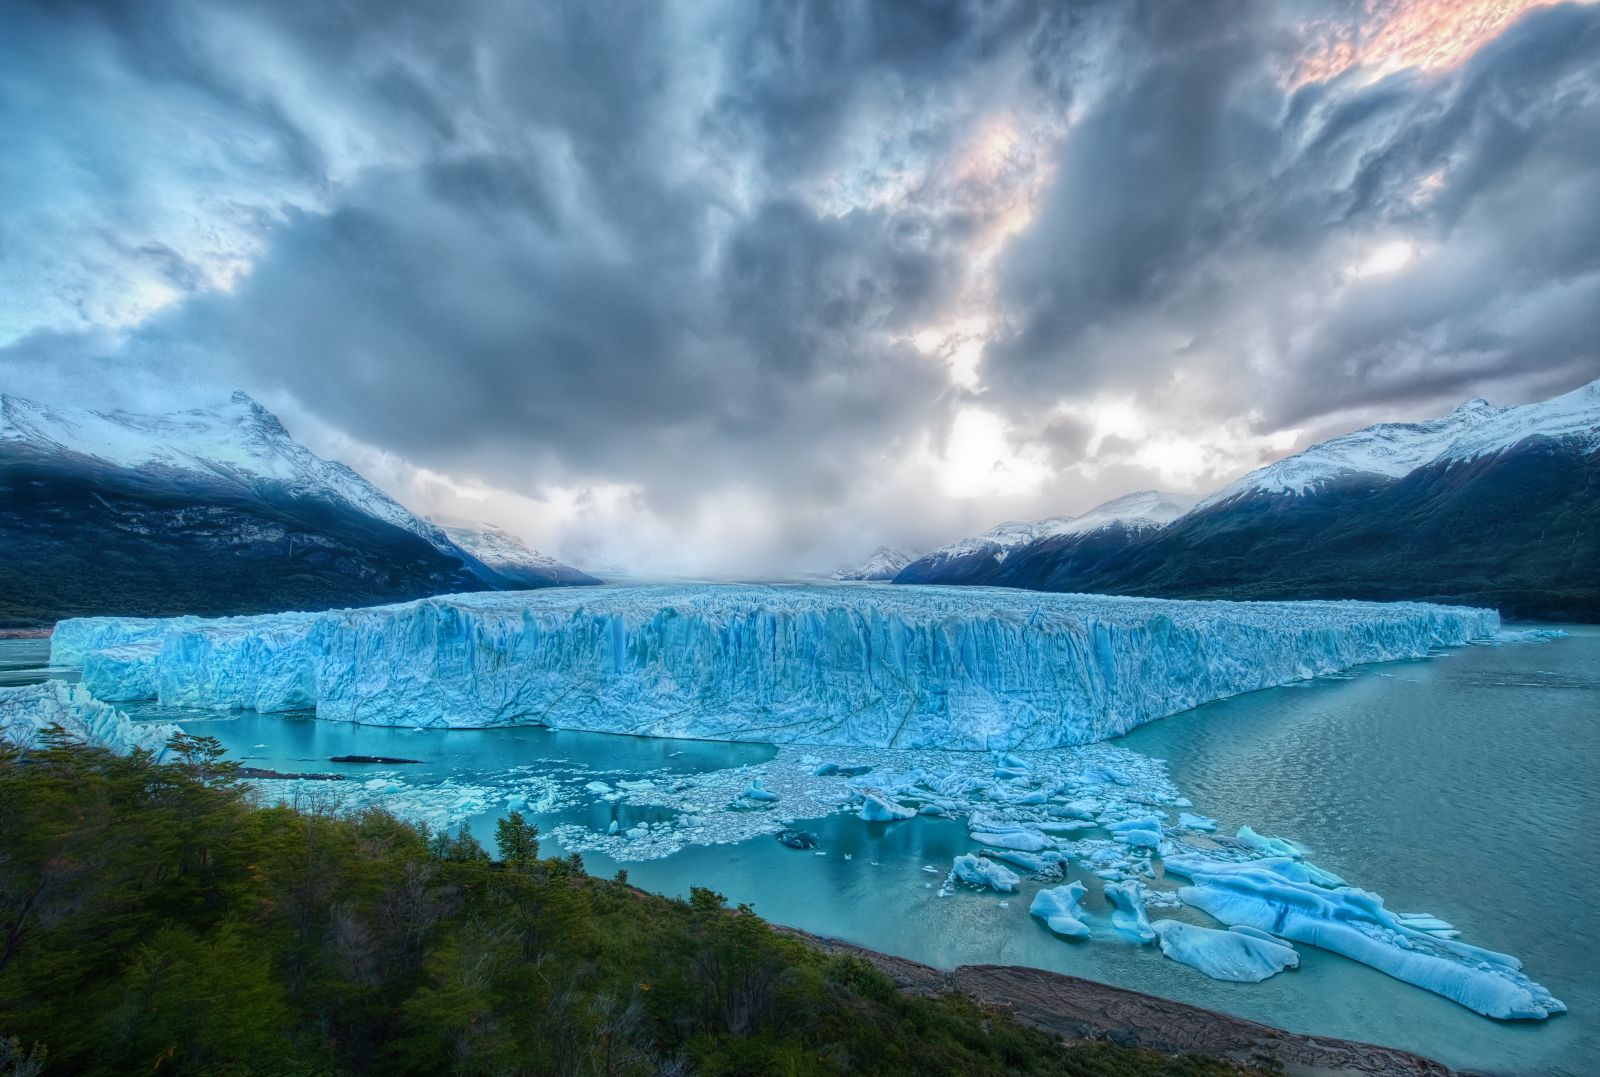  Sông băng Perito Moreno Hanotours